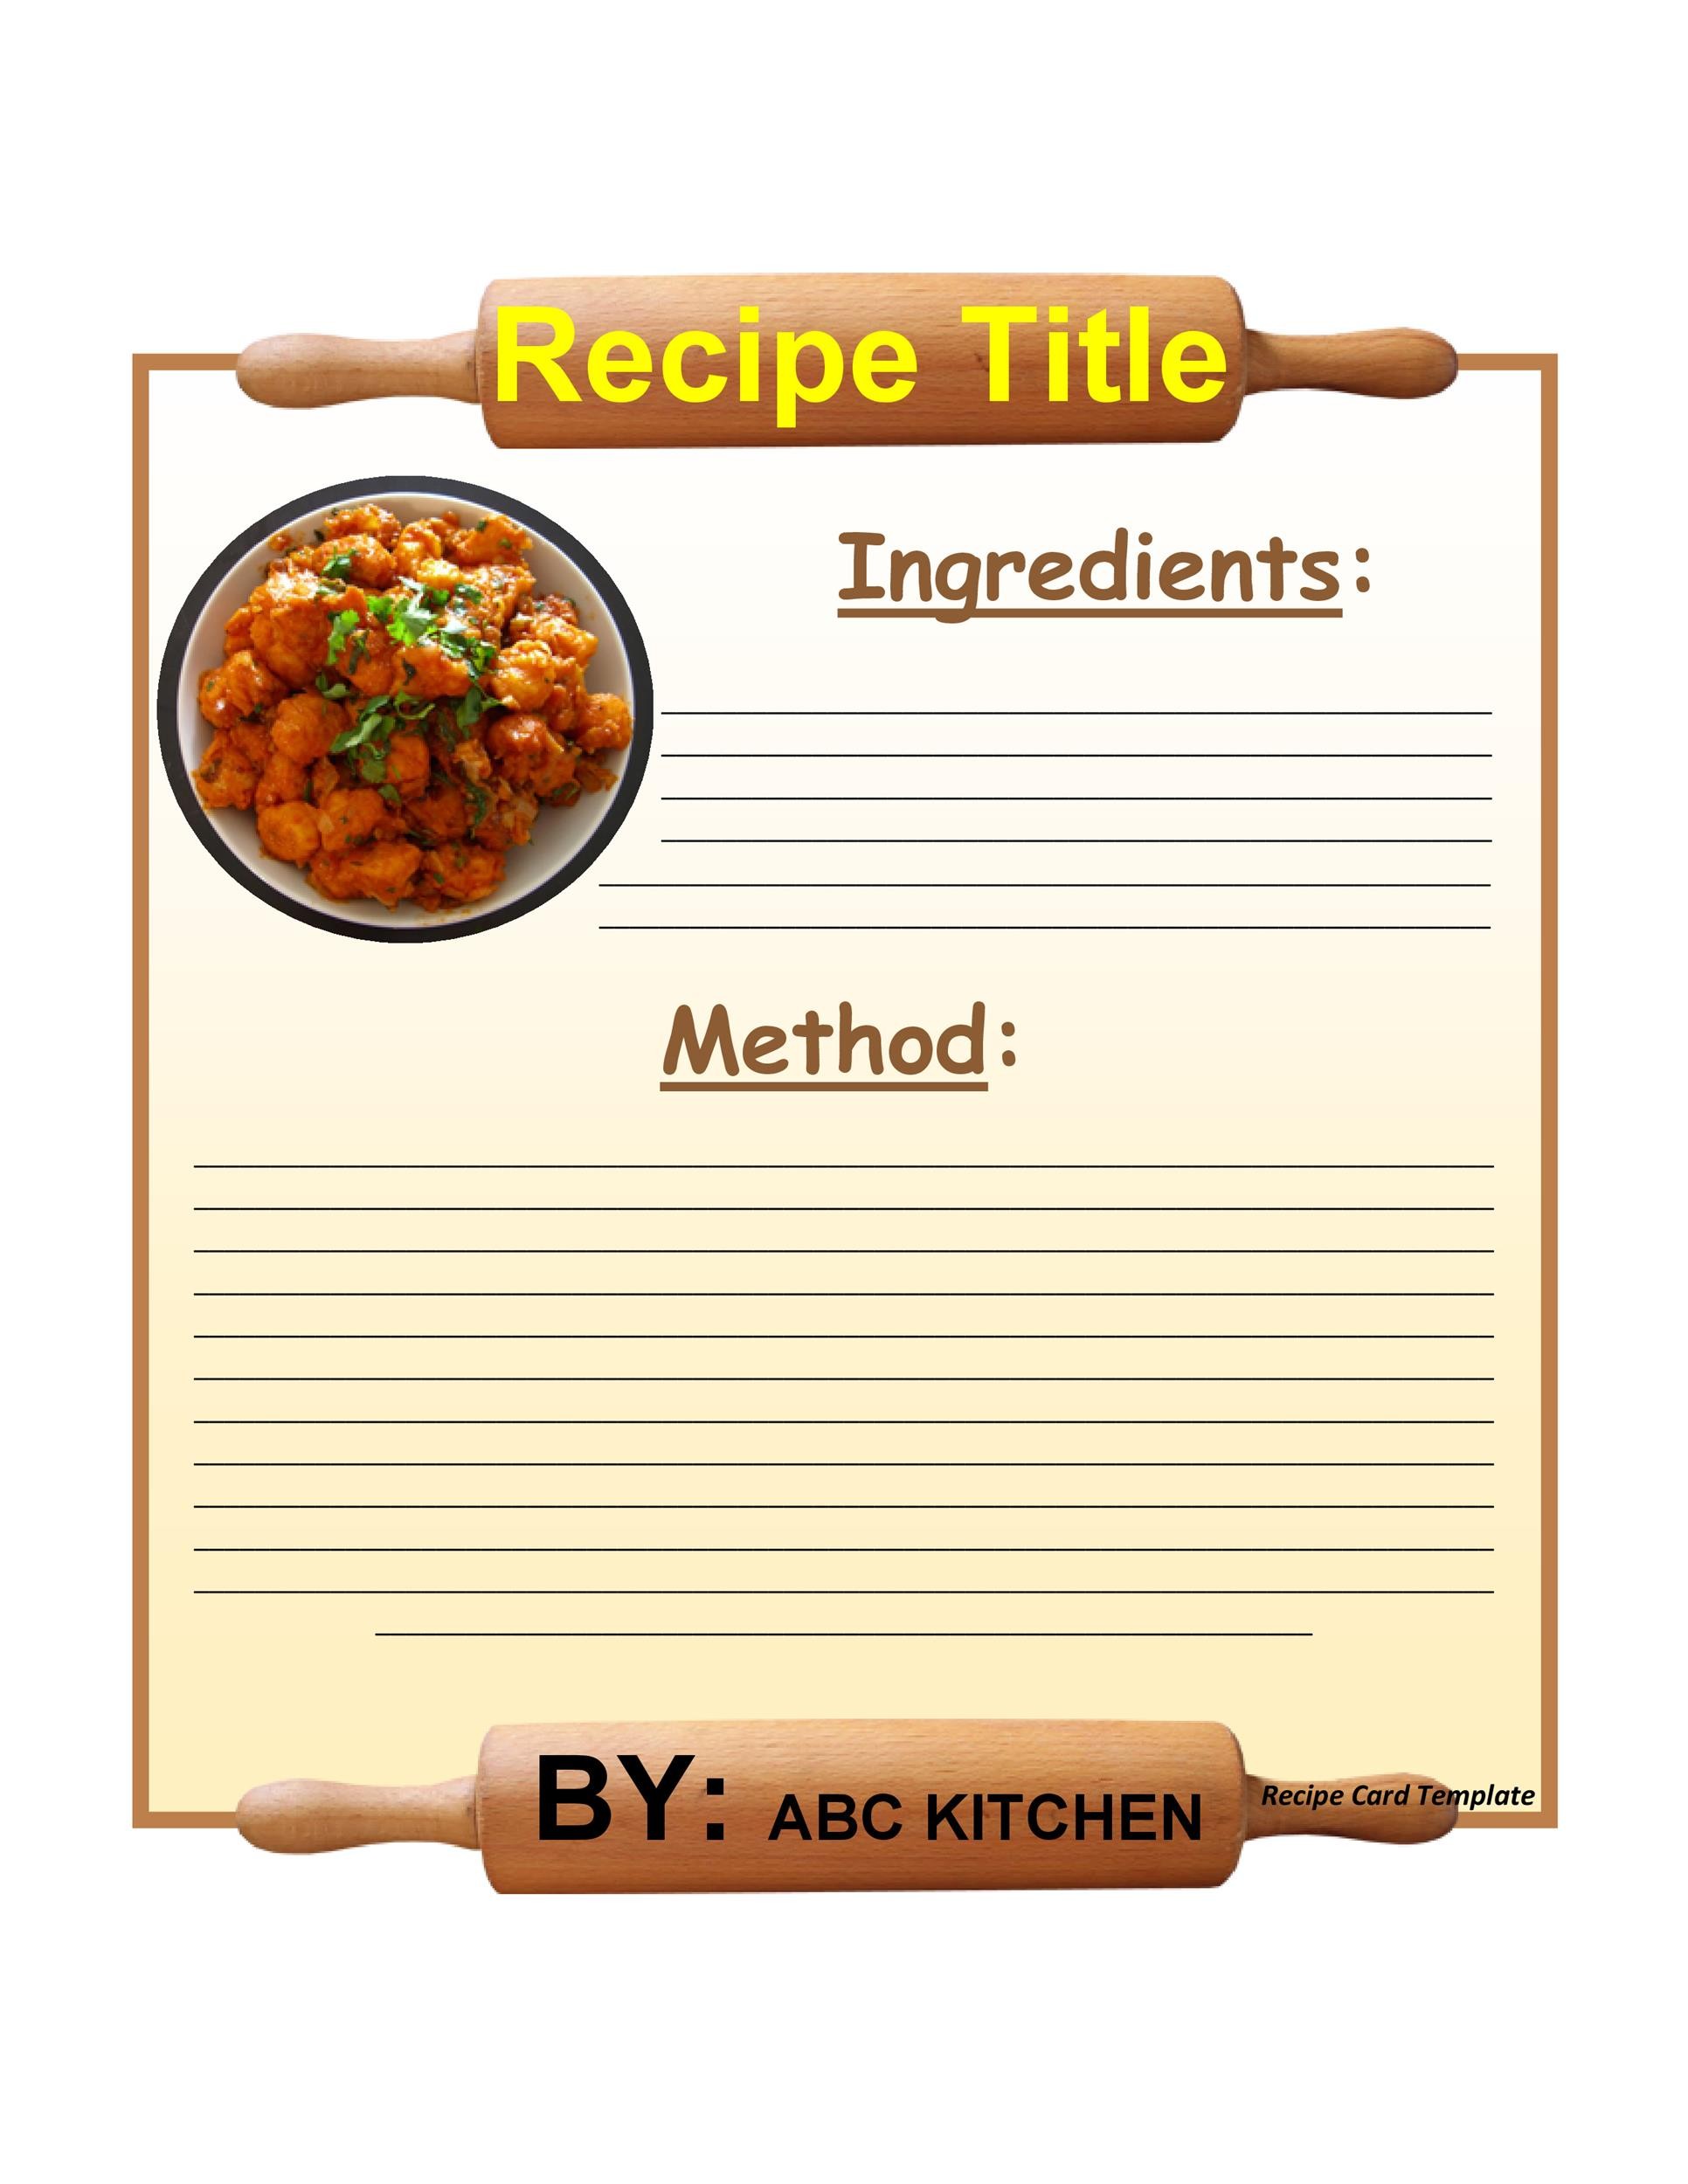 44 Perfect Cookbook Templates [+Recipe Book & Recipe Cards]